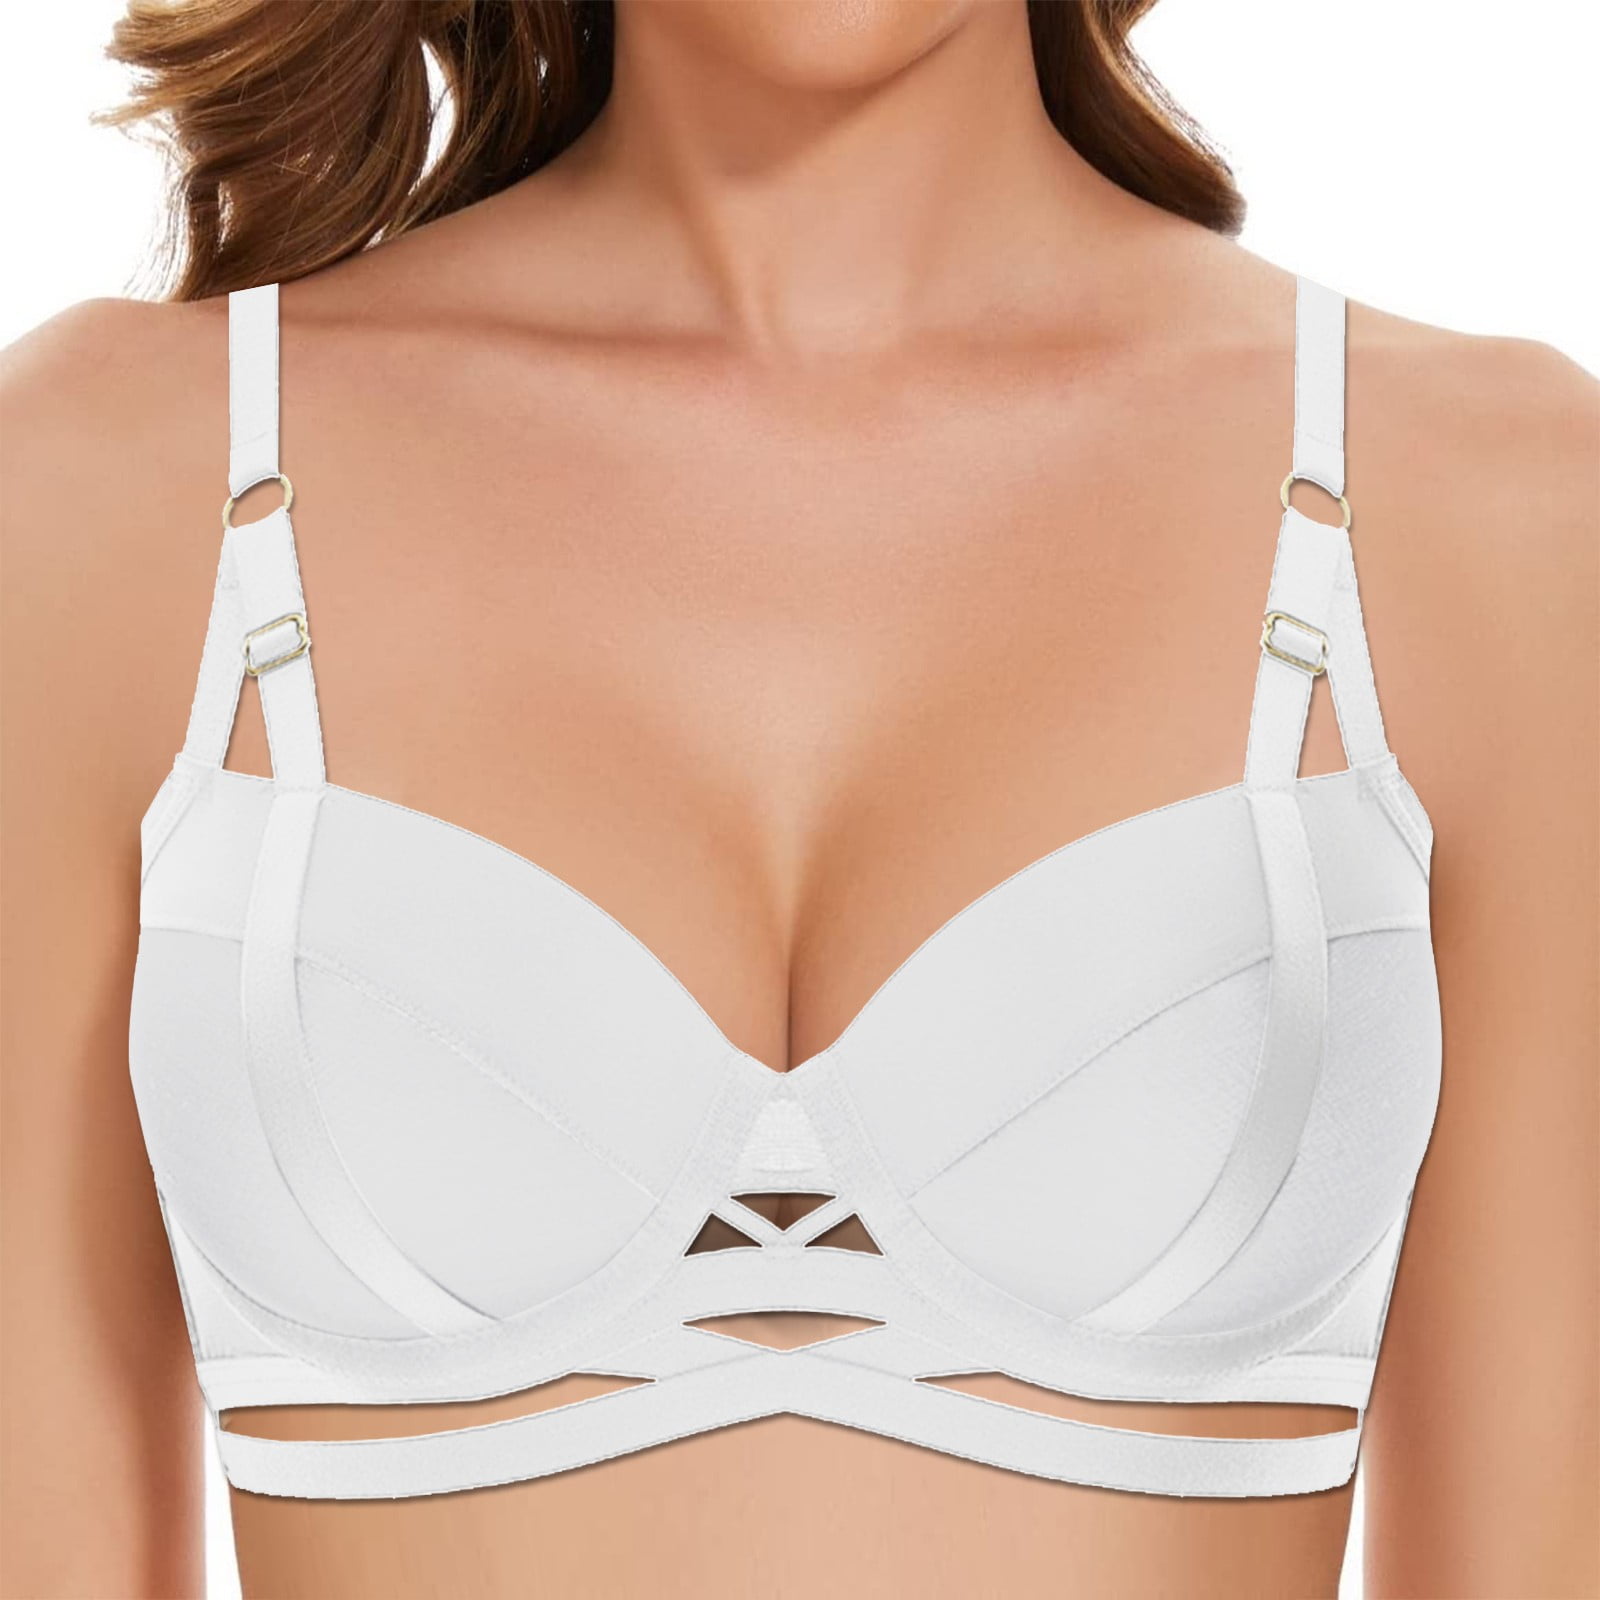 Buy OO LALA JI 100% Cotton Women's Breast Lifts Bra Wireless Size 32B White  at